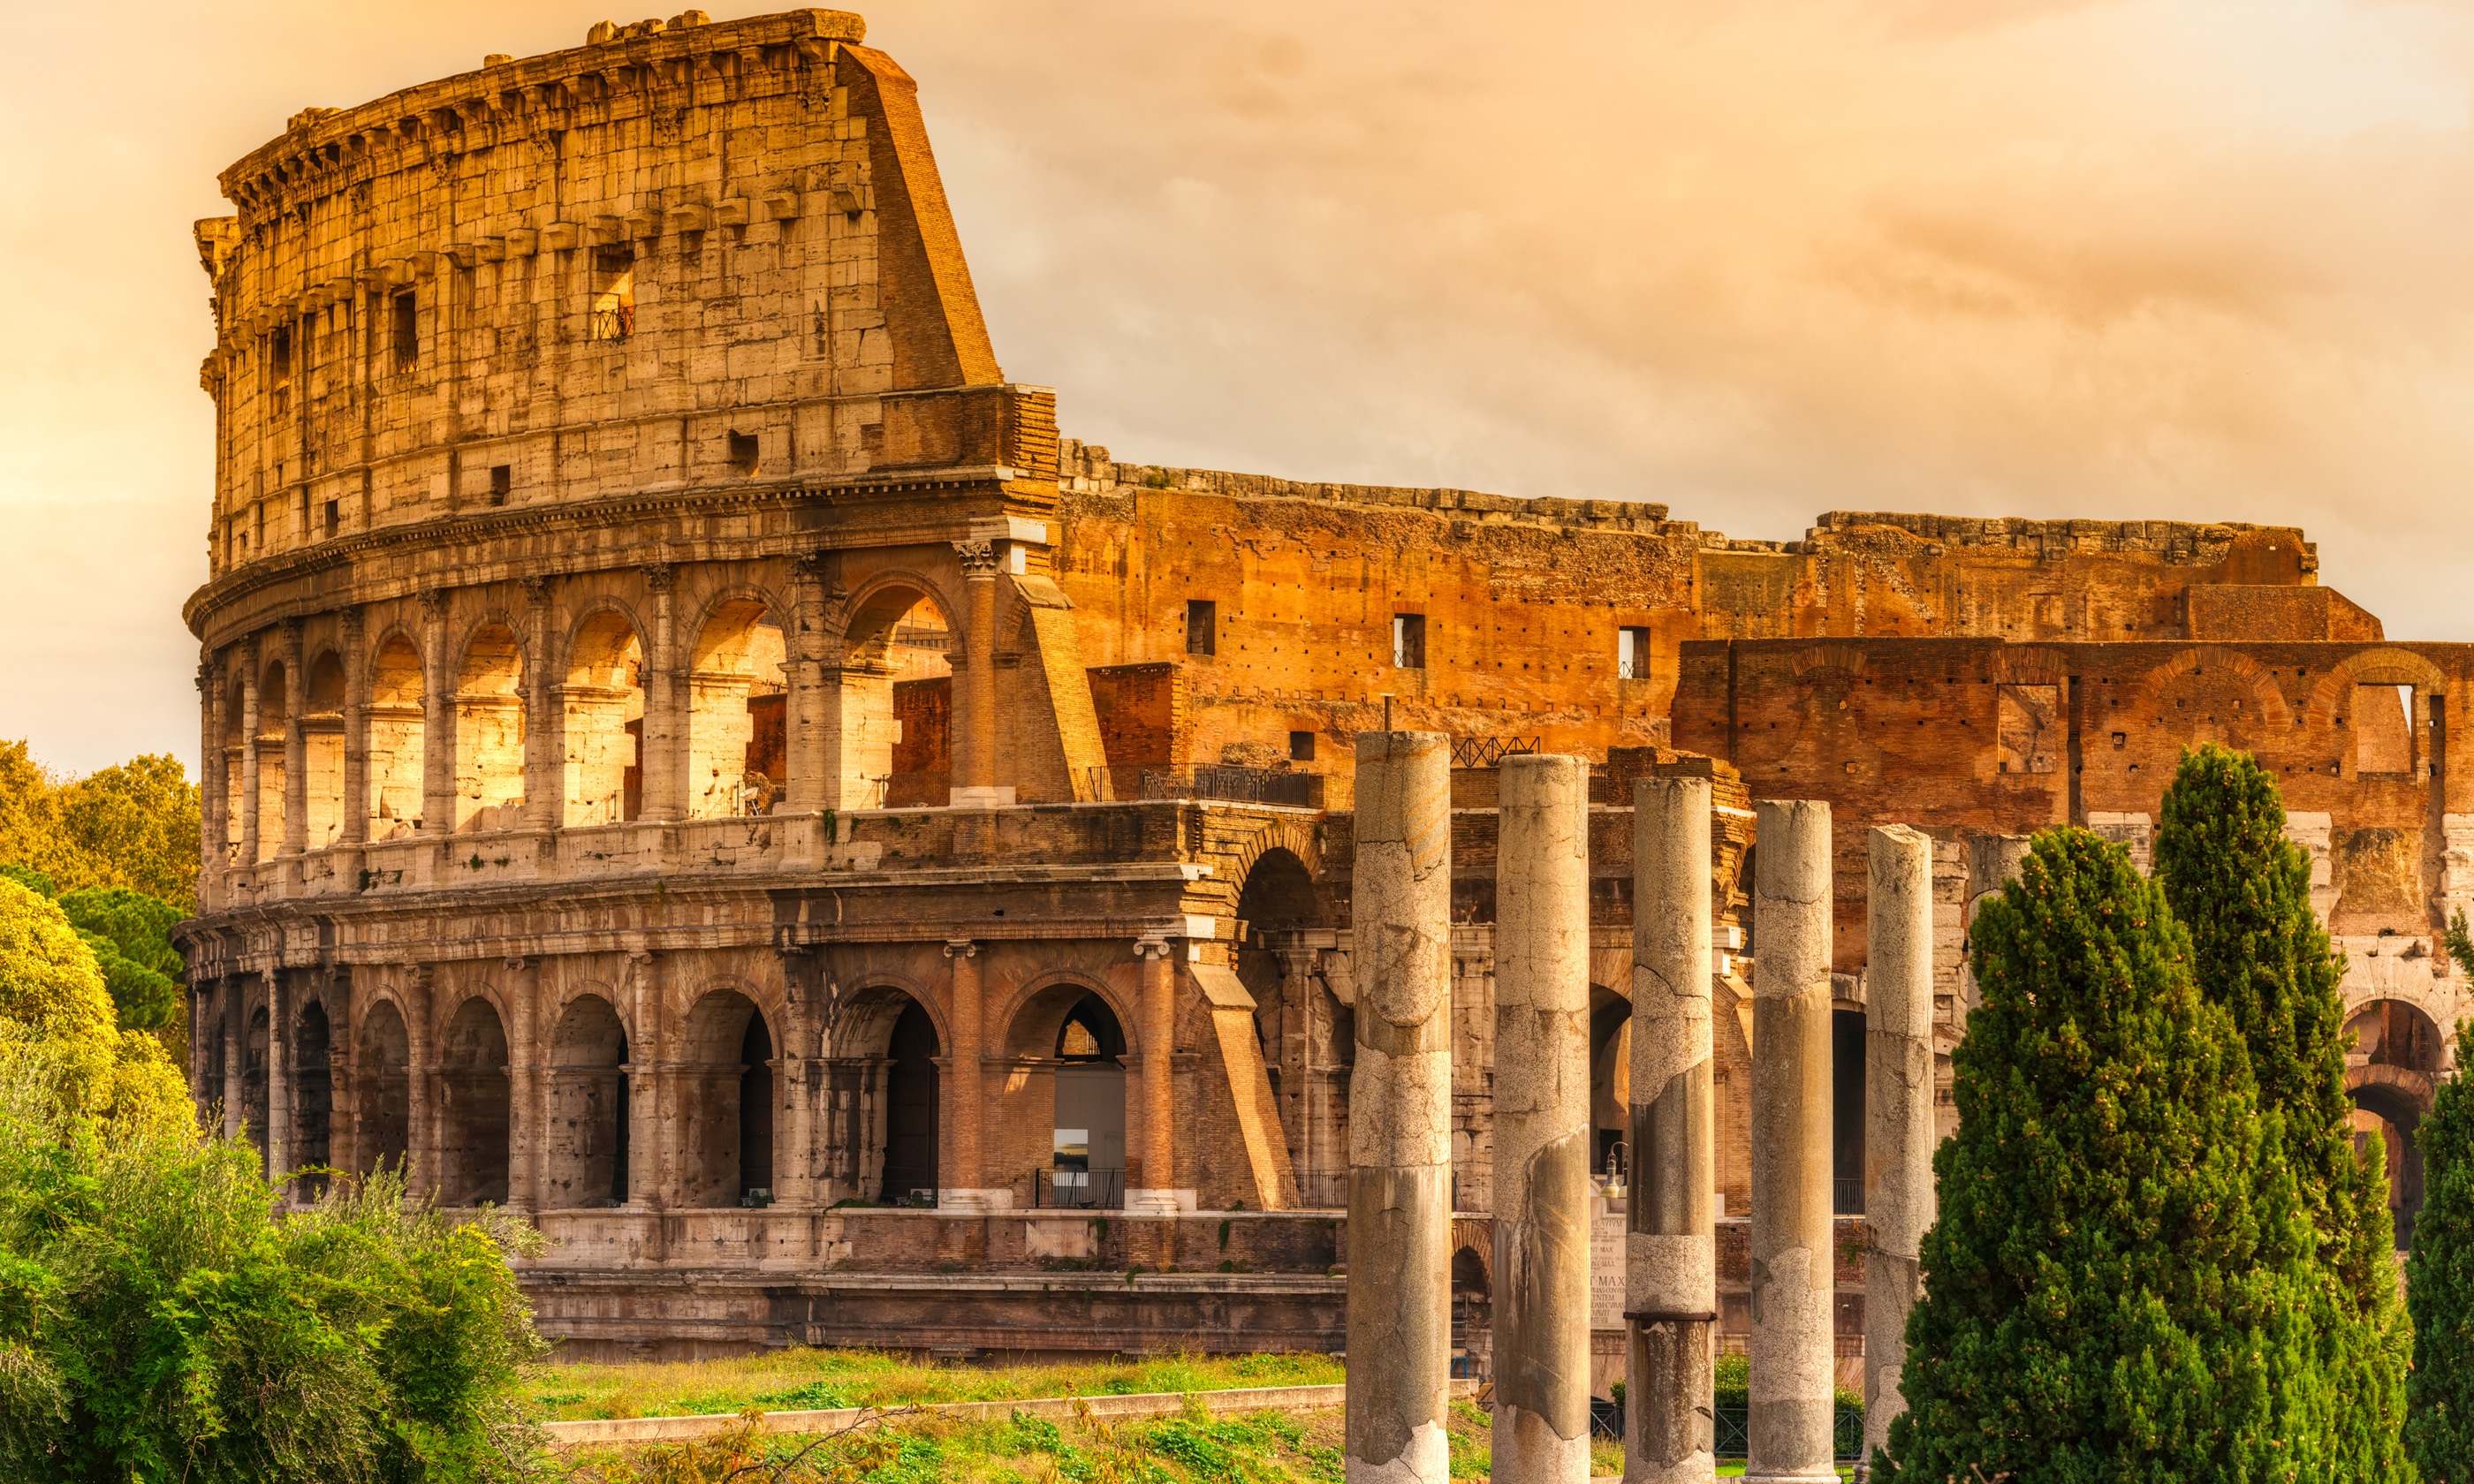 Coliseum in Rome (Shutterstock.com. See main credit below)